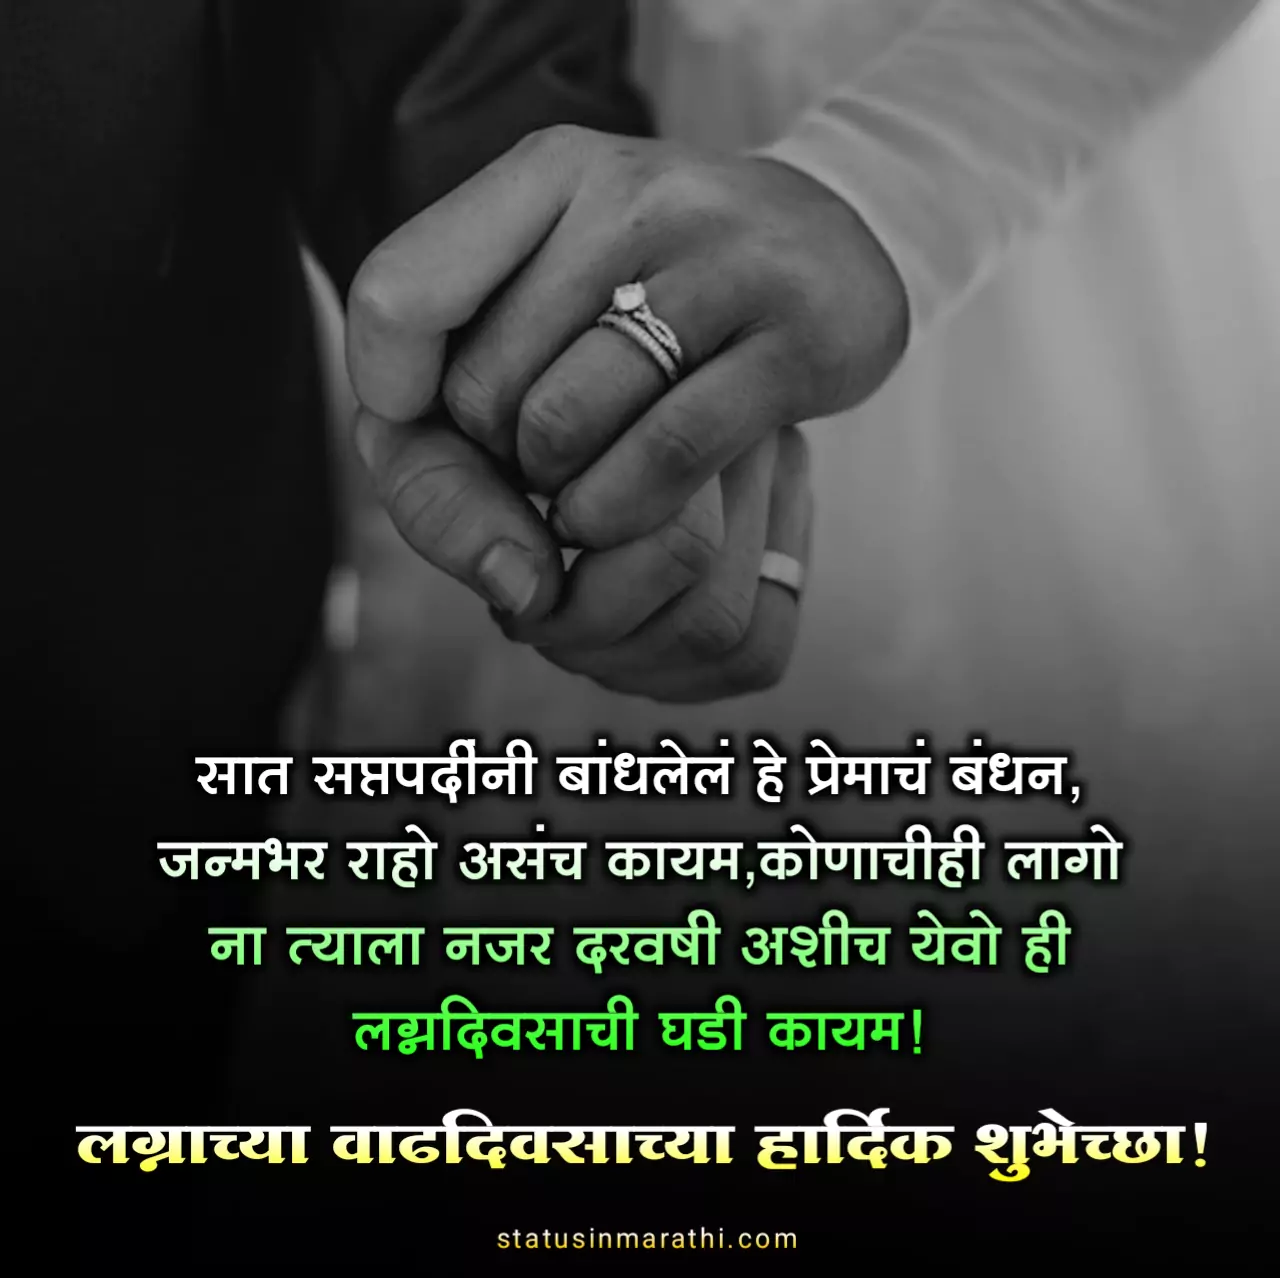 Happy Marriage Anniversary status In Marathi